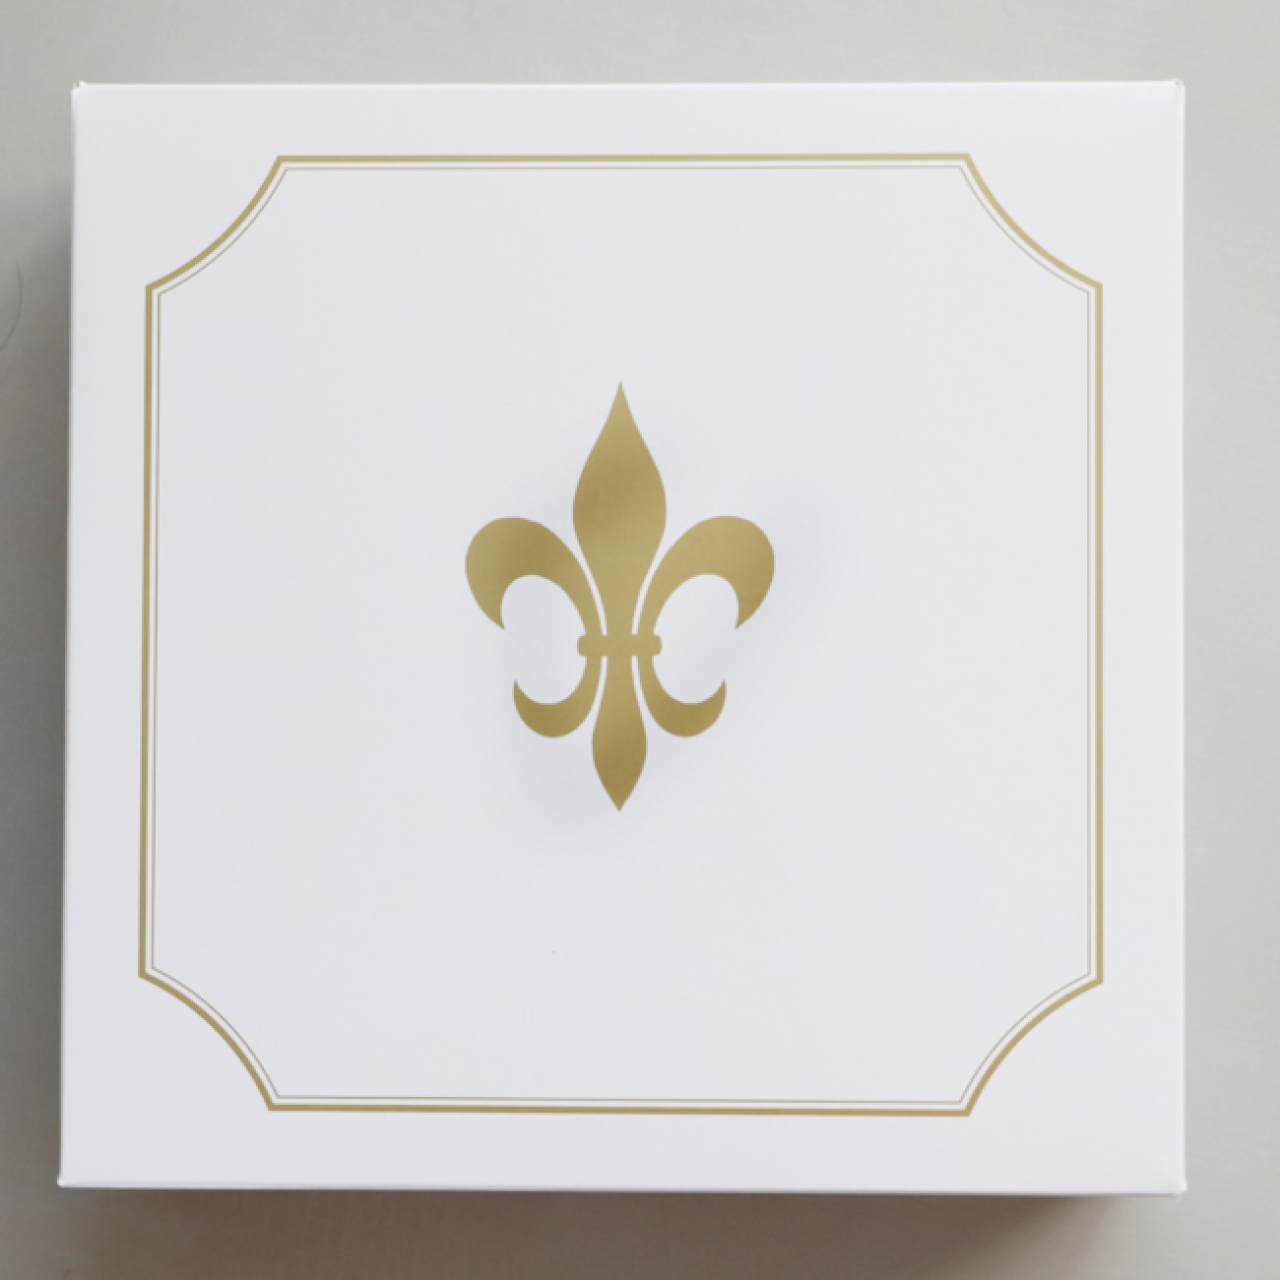 Tortenkarton 32 x 32 x 12 cm, weiß/gold, Lilien-Muster